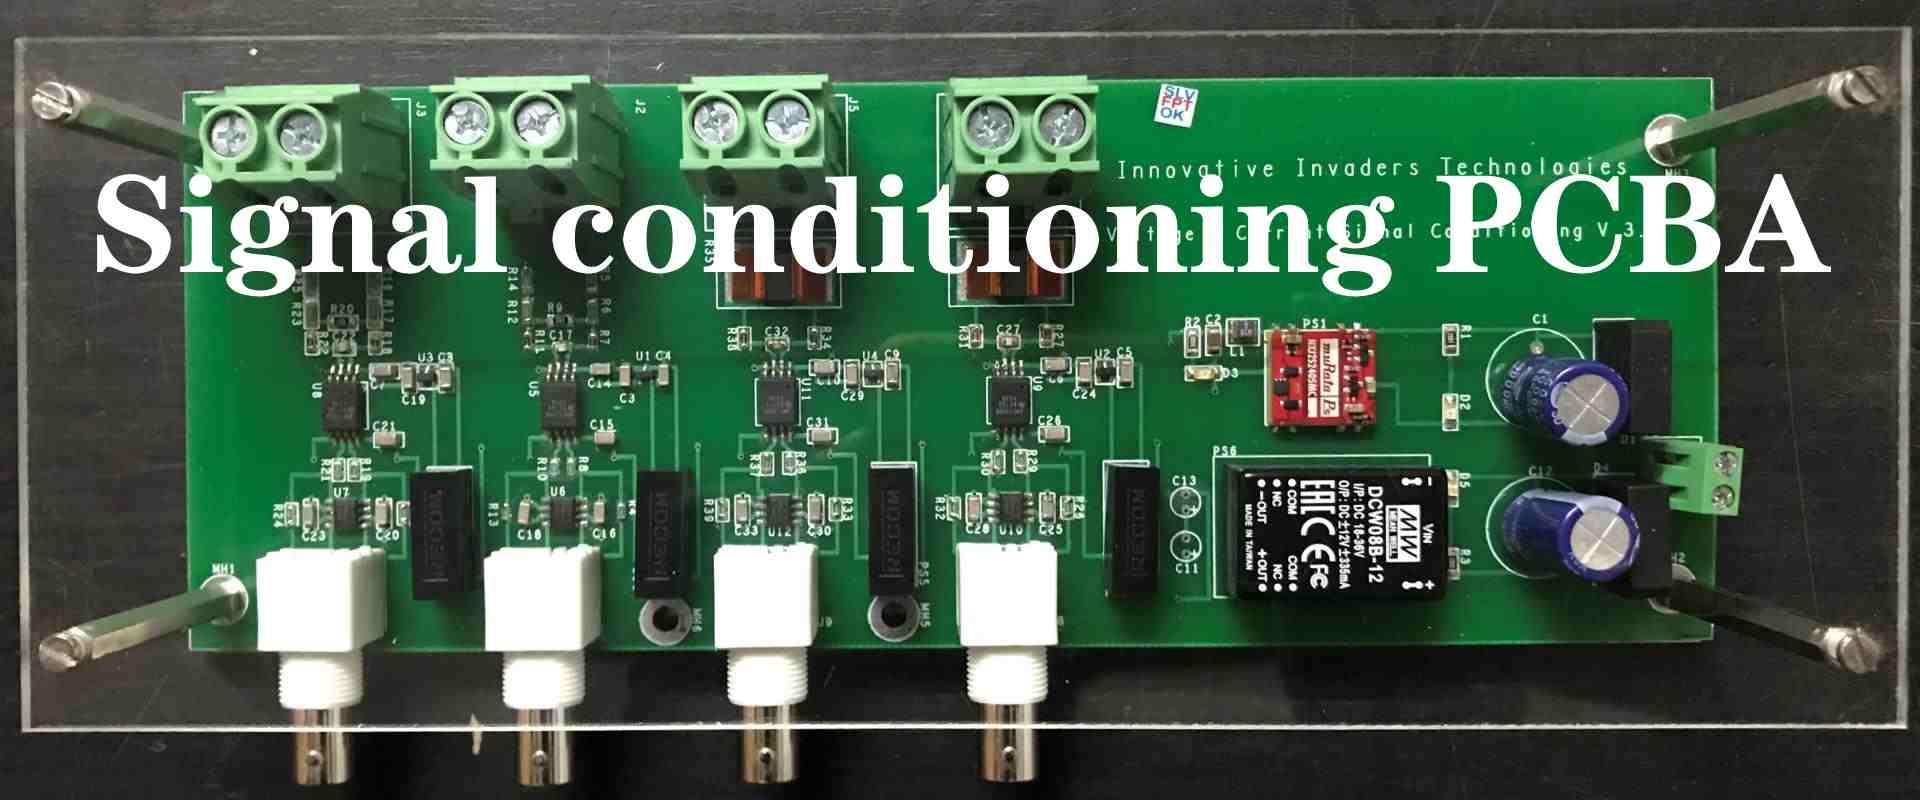 Signal-conditioning-PCBA-6